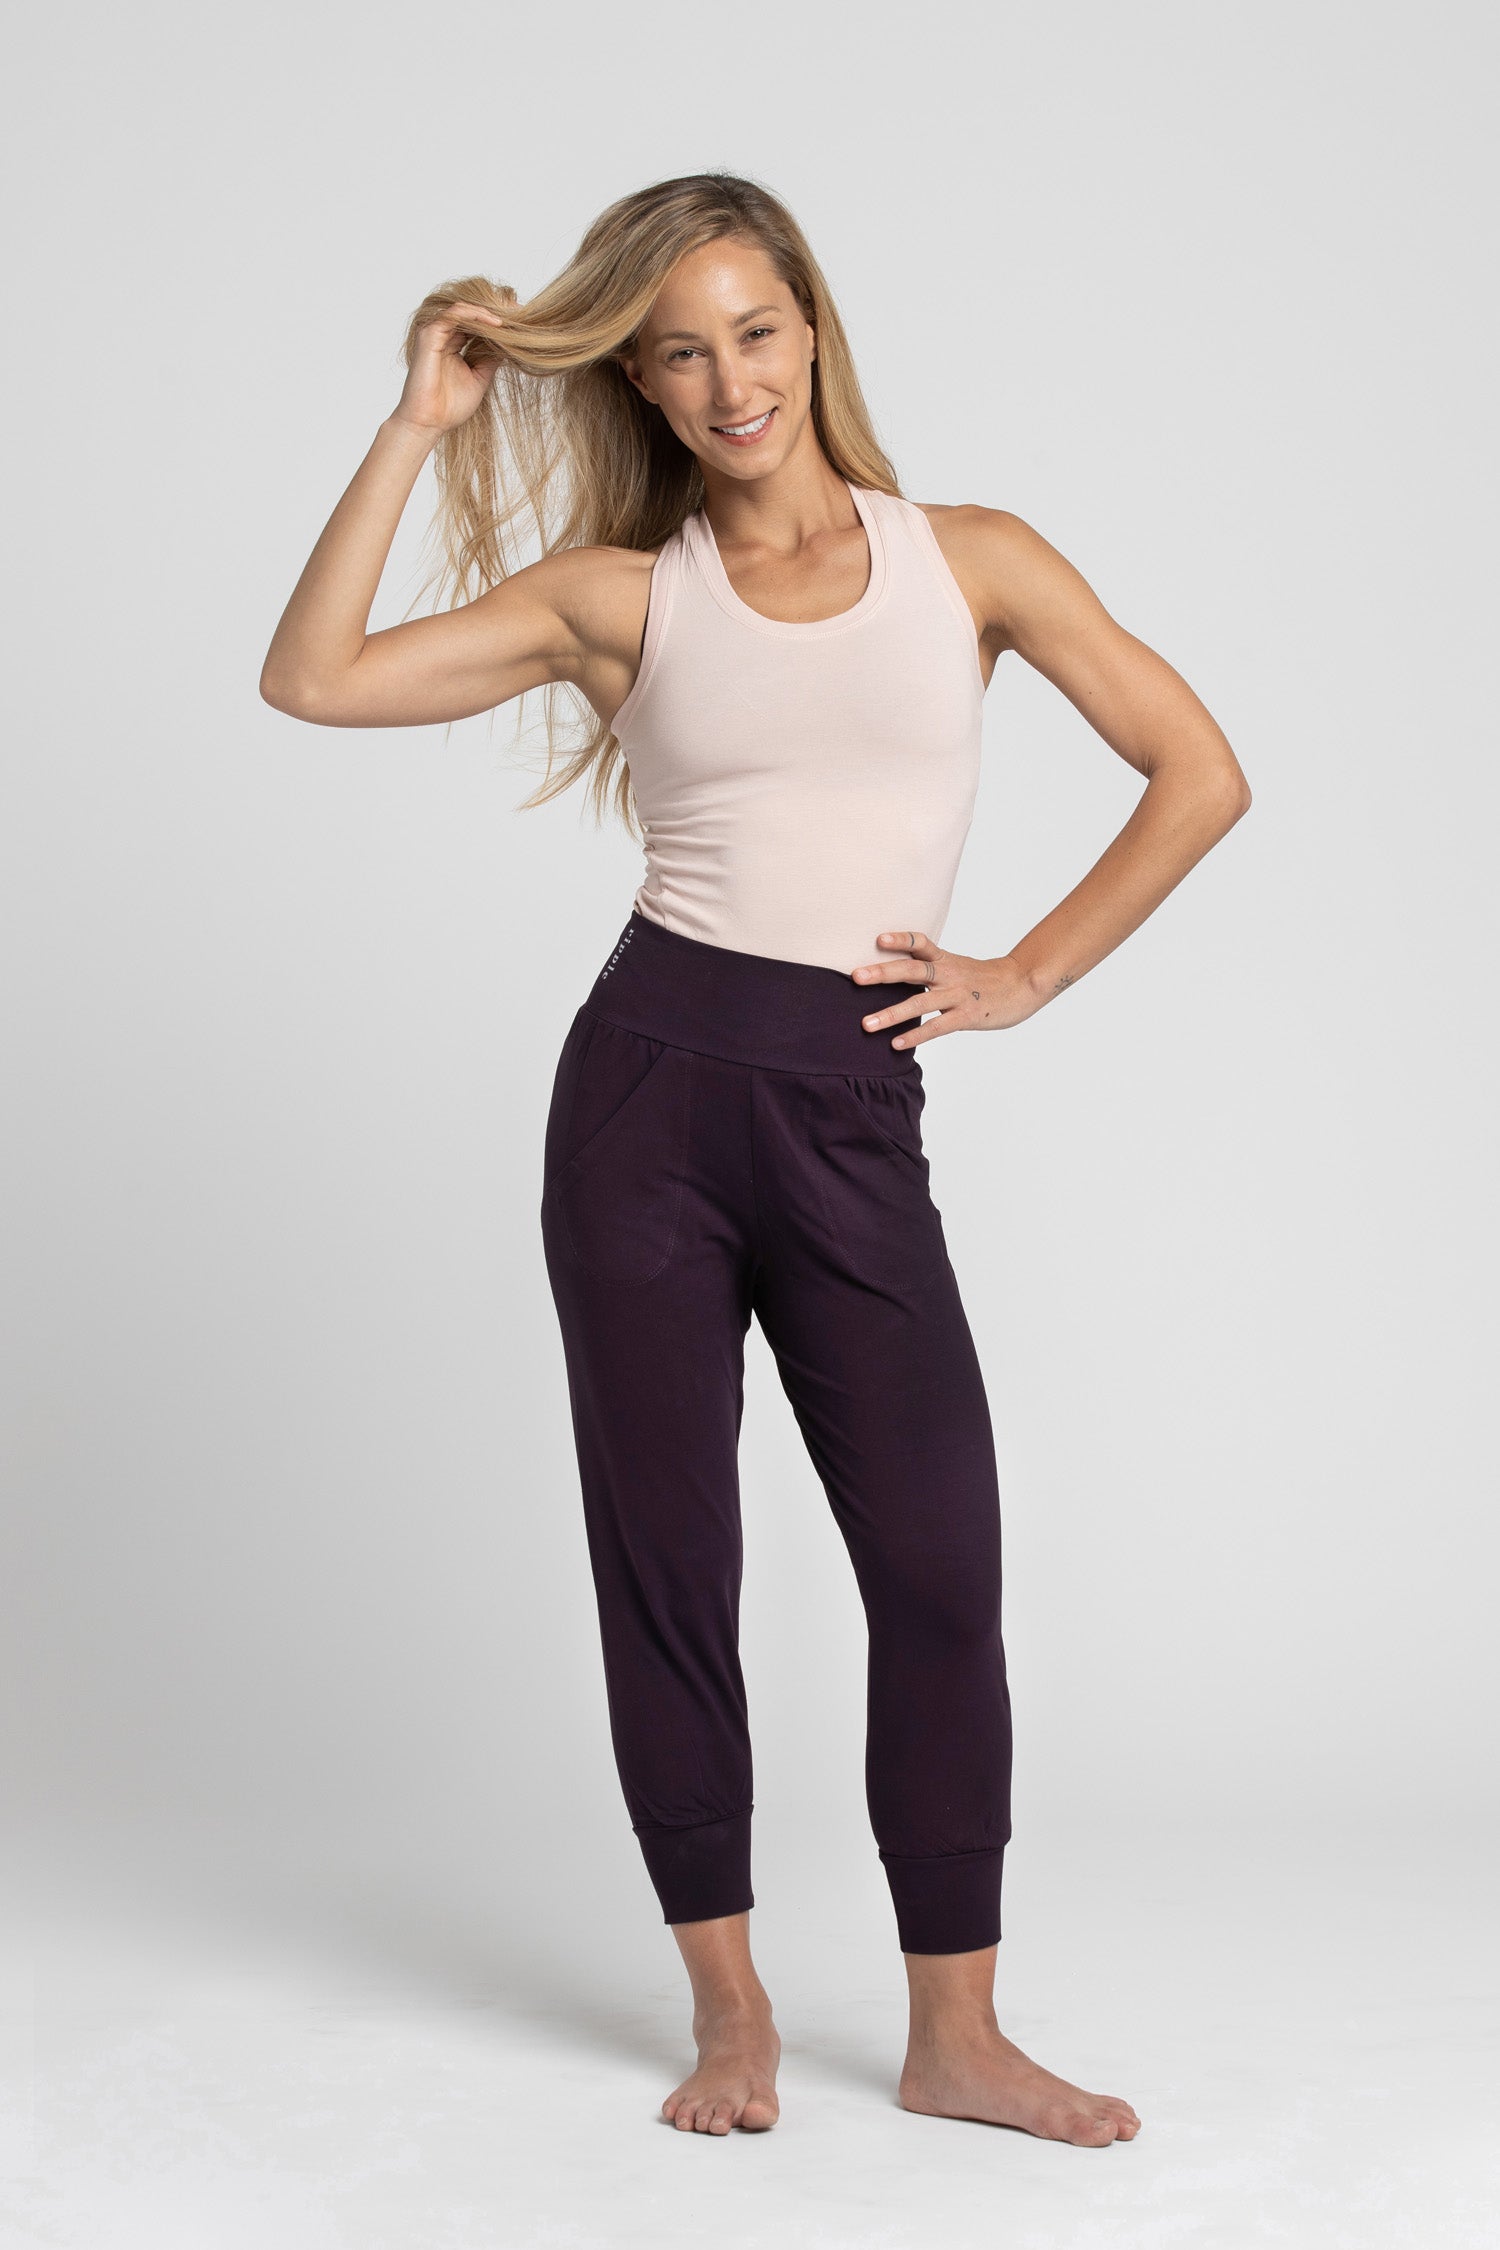 LifeSky Yoga Short Pants for Women, Comfy High Palestine